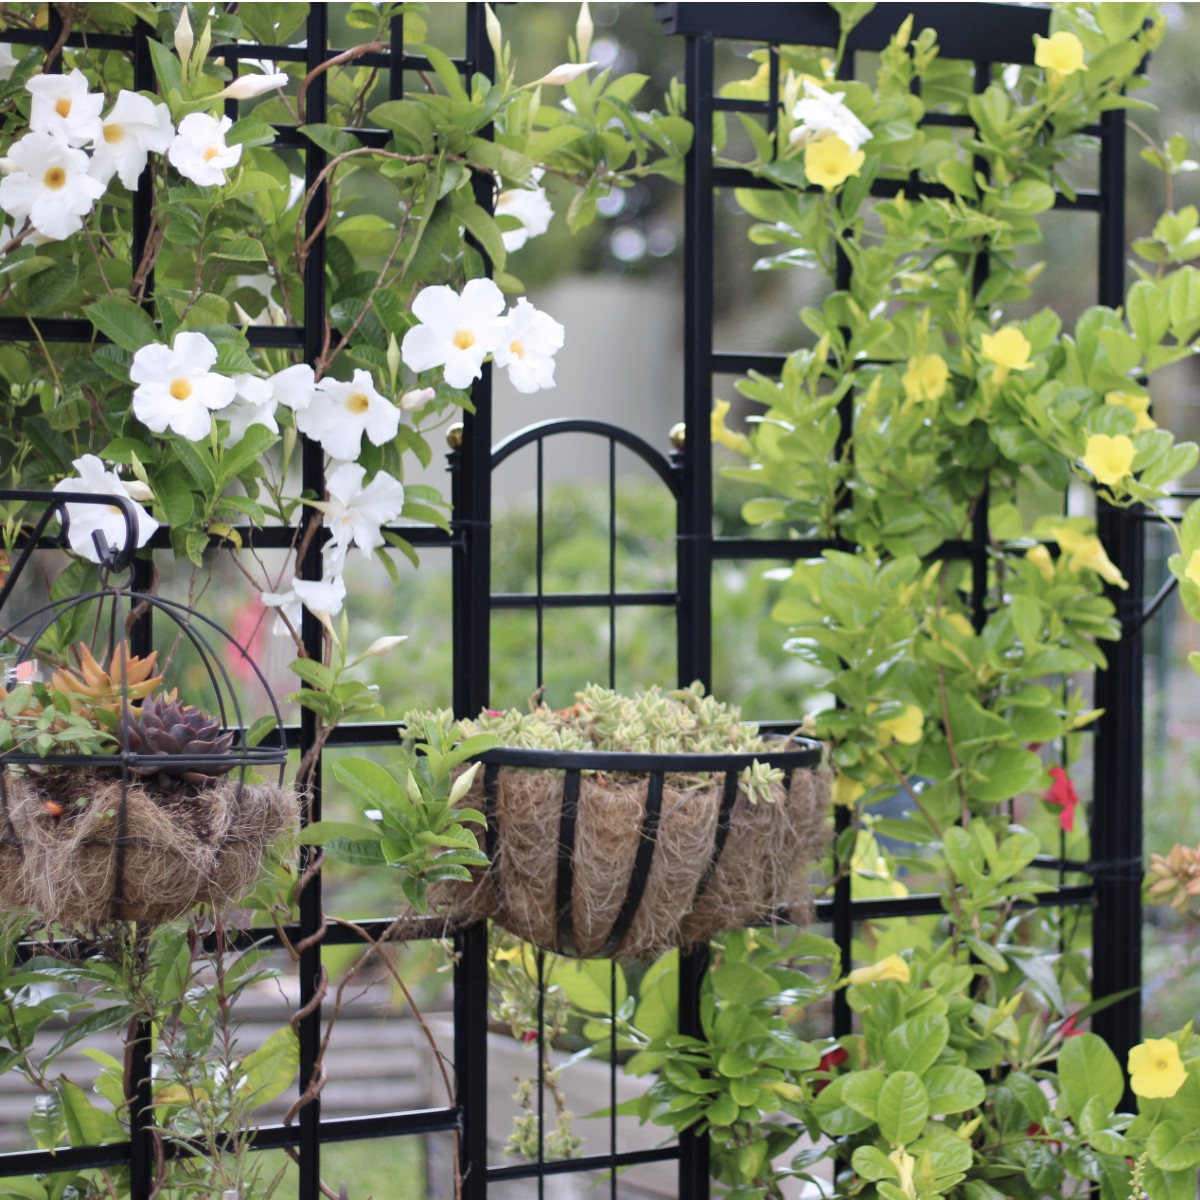 Trellis fence with baskets and white mandevilla vine